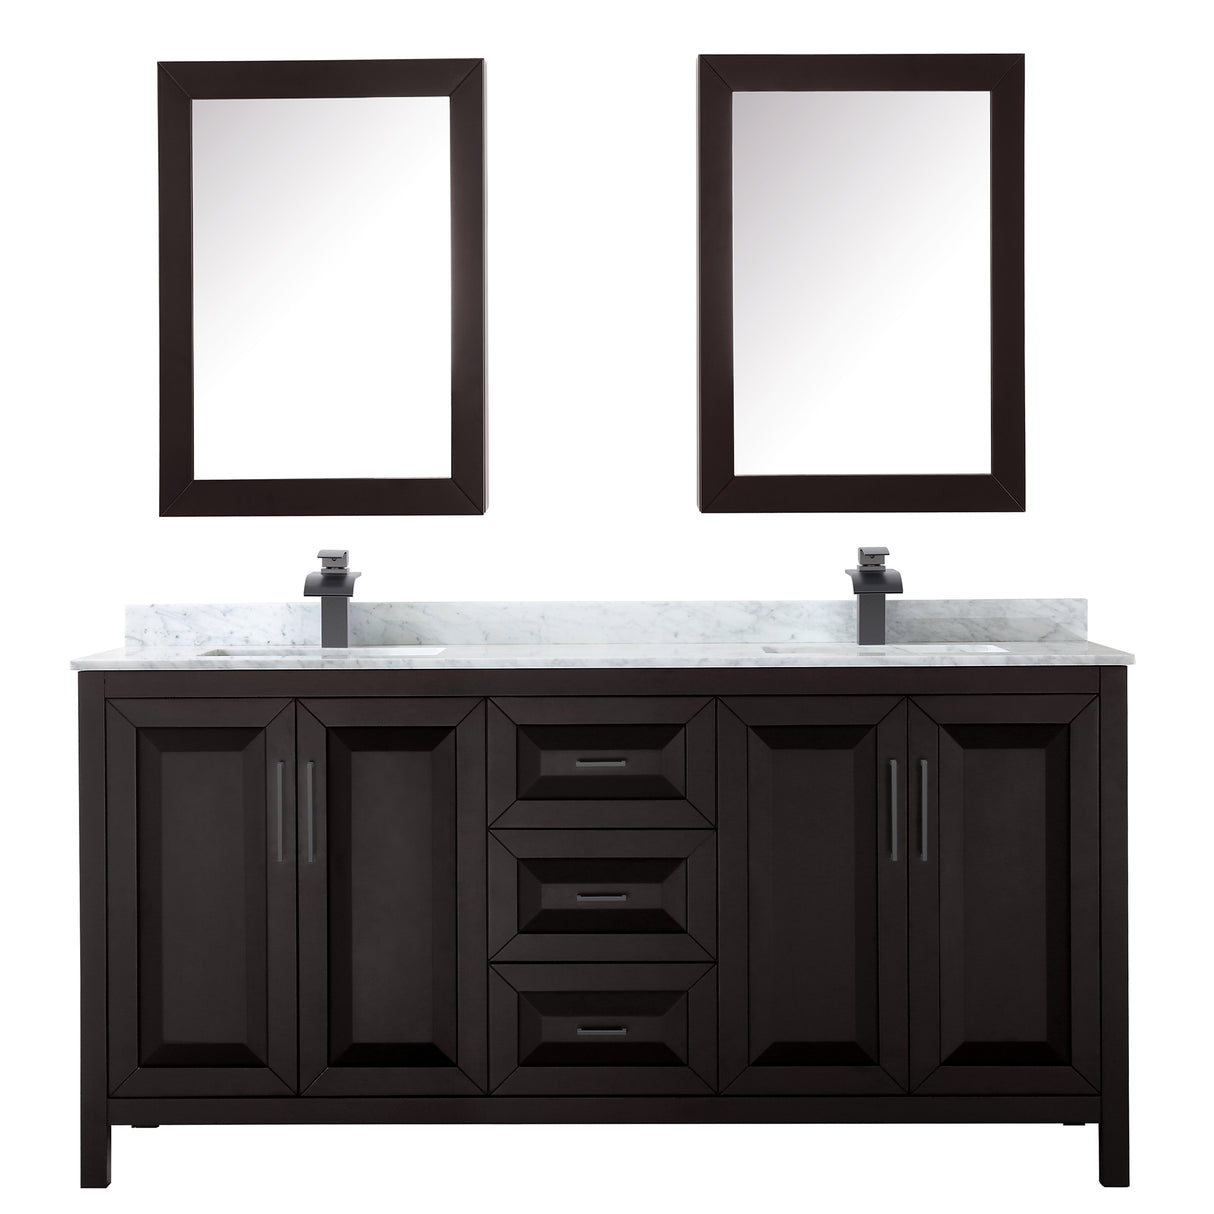 Daria 72 Inch Double Bathroom Vanity in Dark Espresso White Carrara Marble Countertop Undermount Square Sinks Matte Black Trim Medicine Cabinets